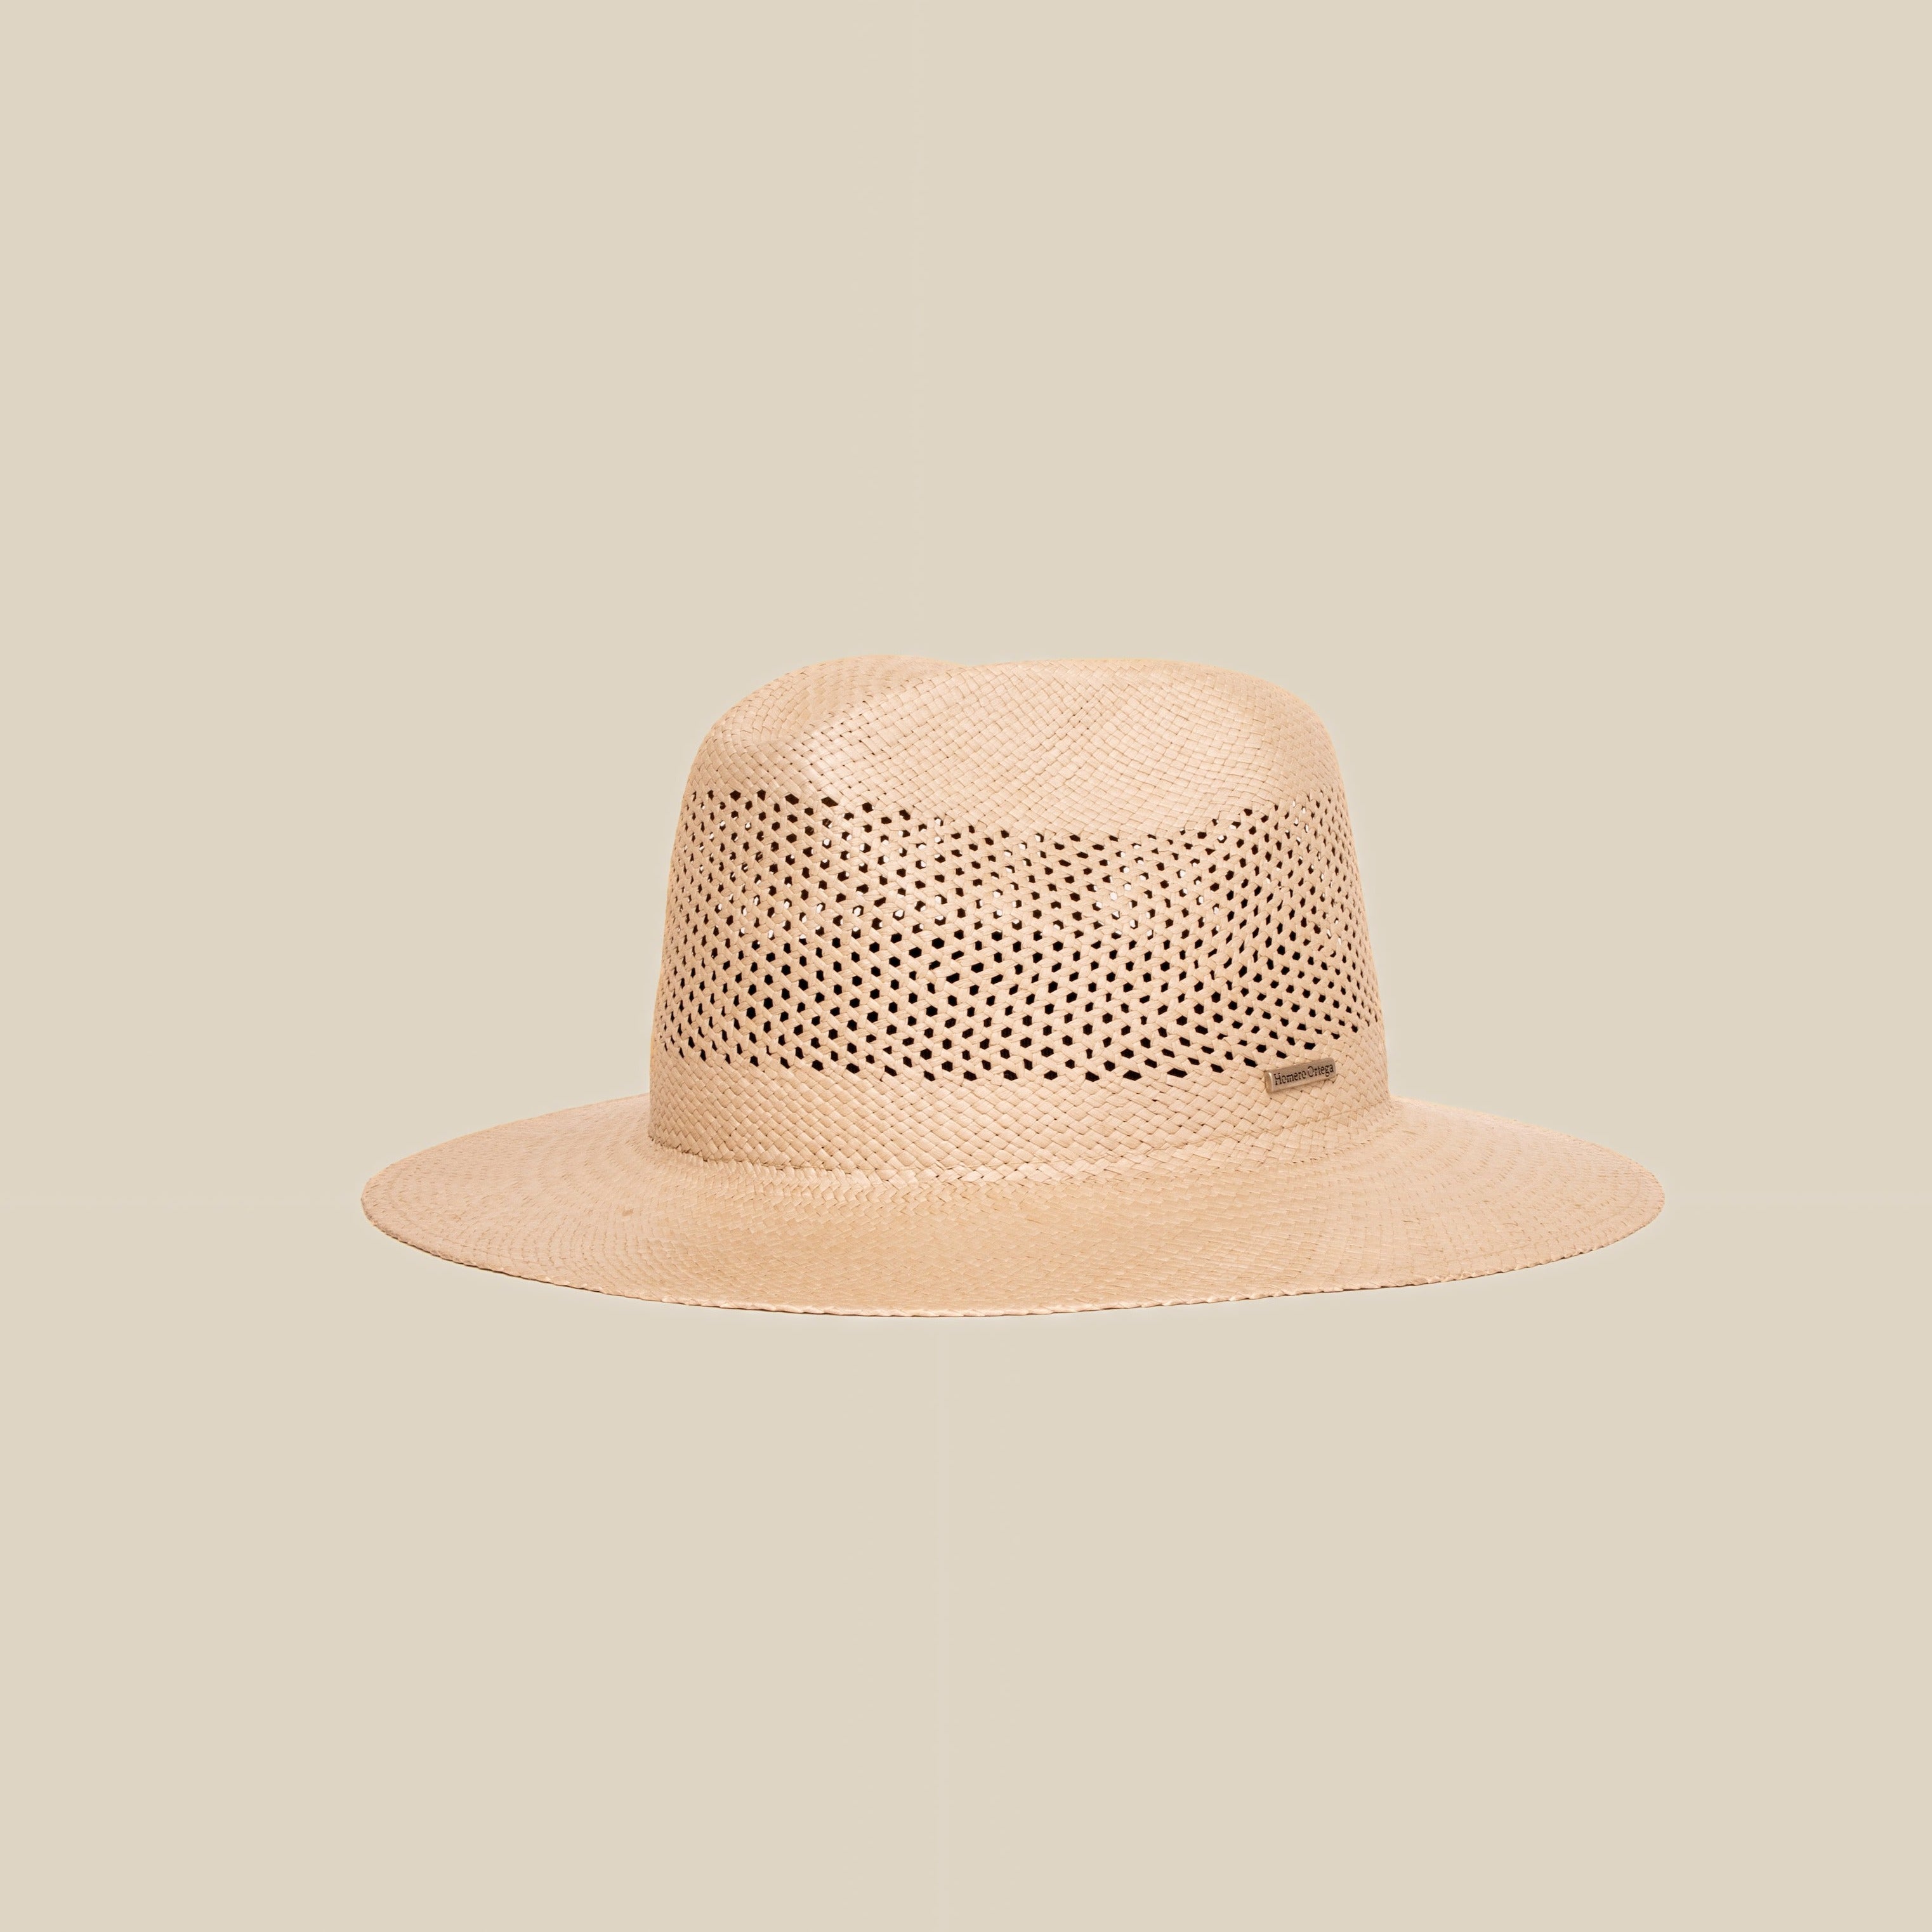 buy original panama hats in melbourne